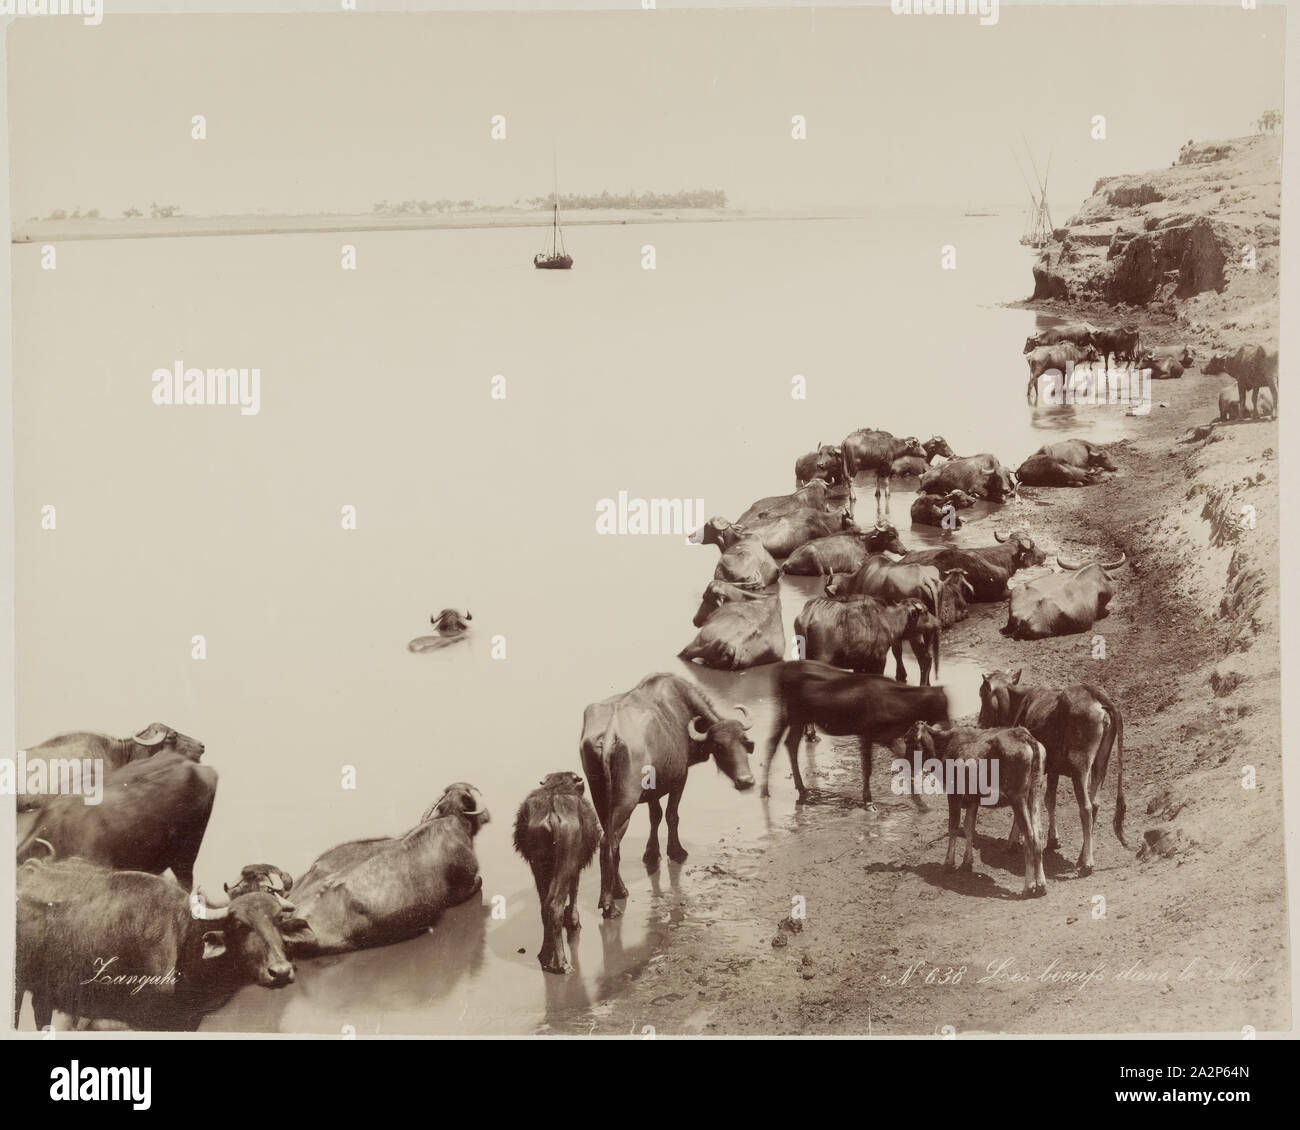 Zangaki, Greek, active 1860-1889, Water Buffalo in the Nile, 19th century, albumen print Stock Photo